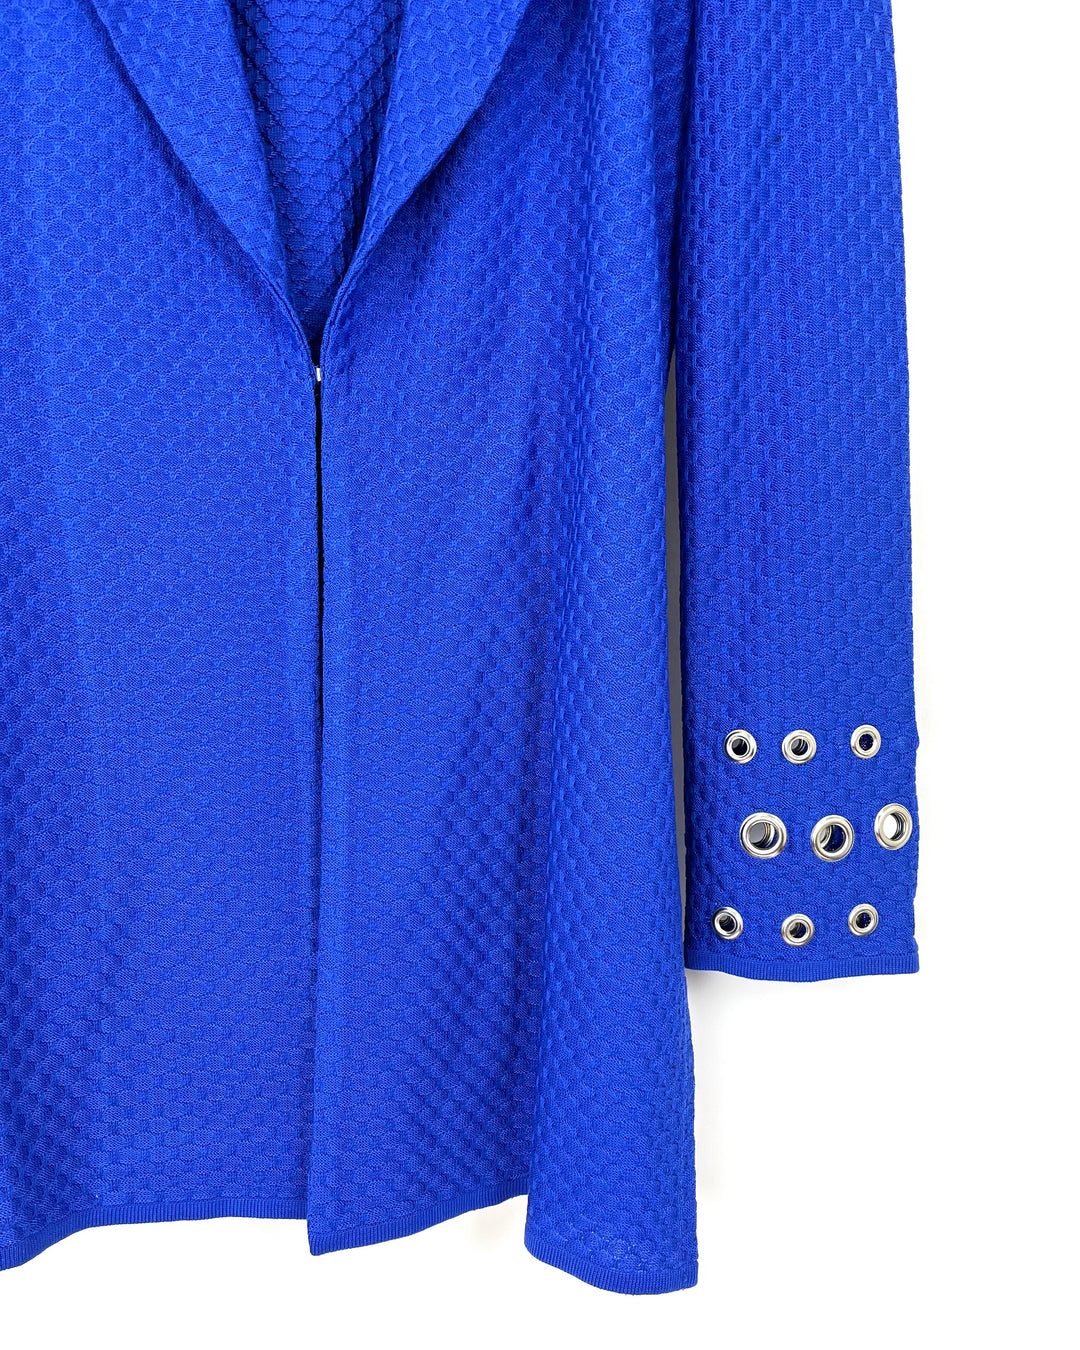 Blue Grommet Sleeve Cardigan - Size 2/4